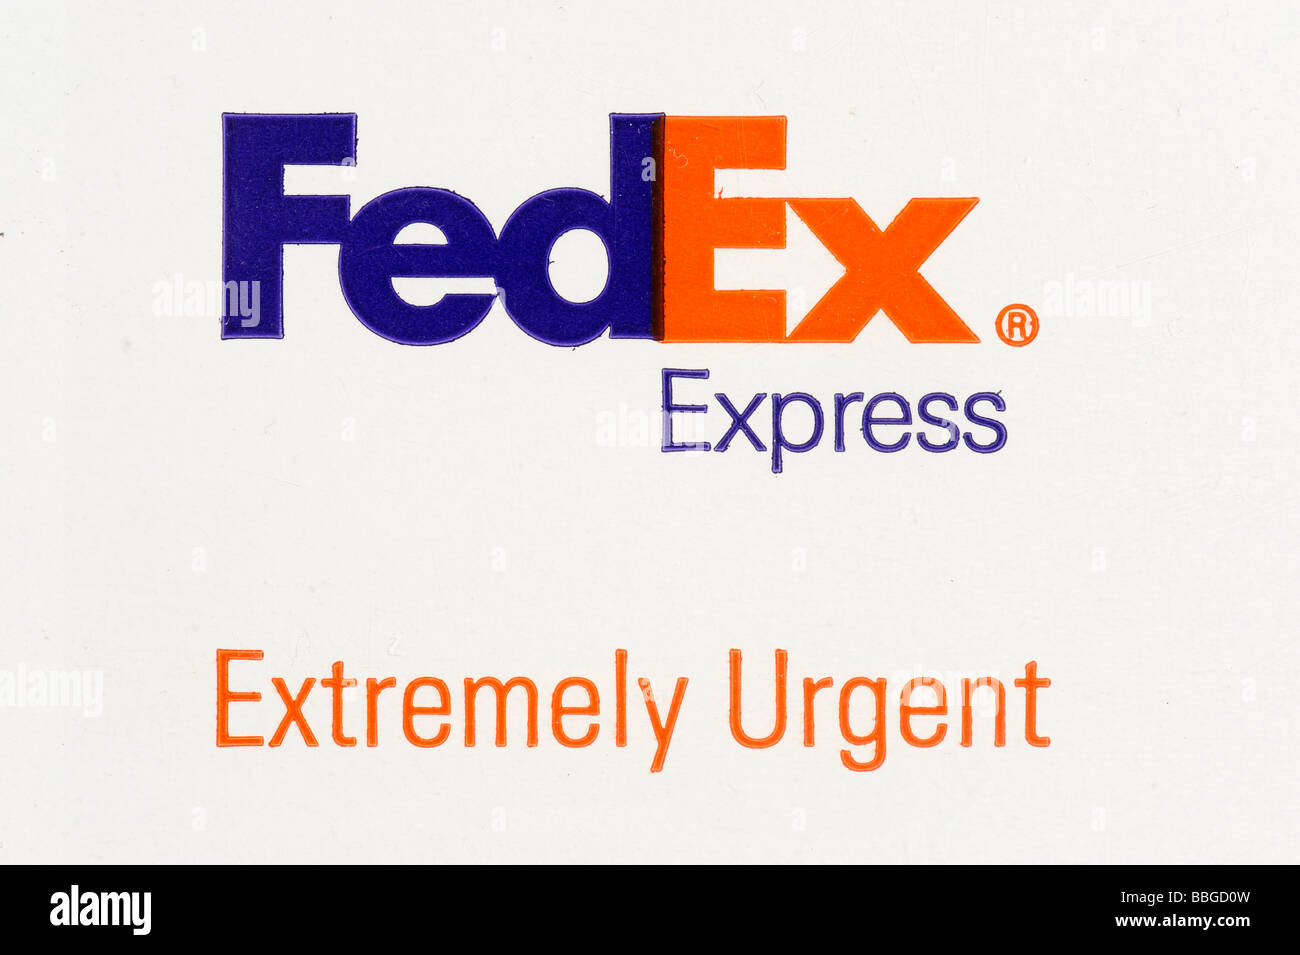 Logo Fedex Express, estremamente urgente Foto Stock